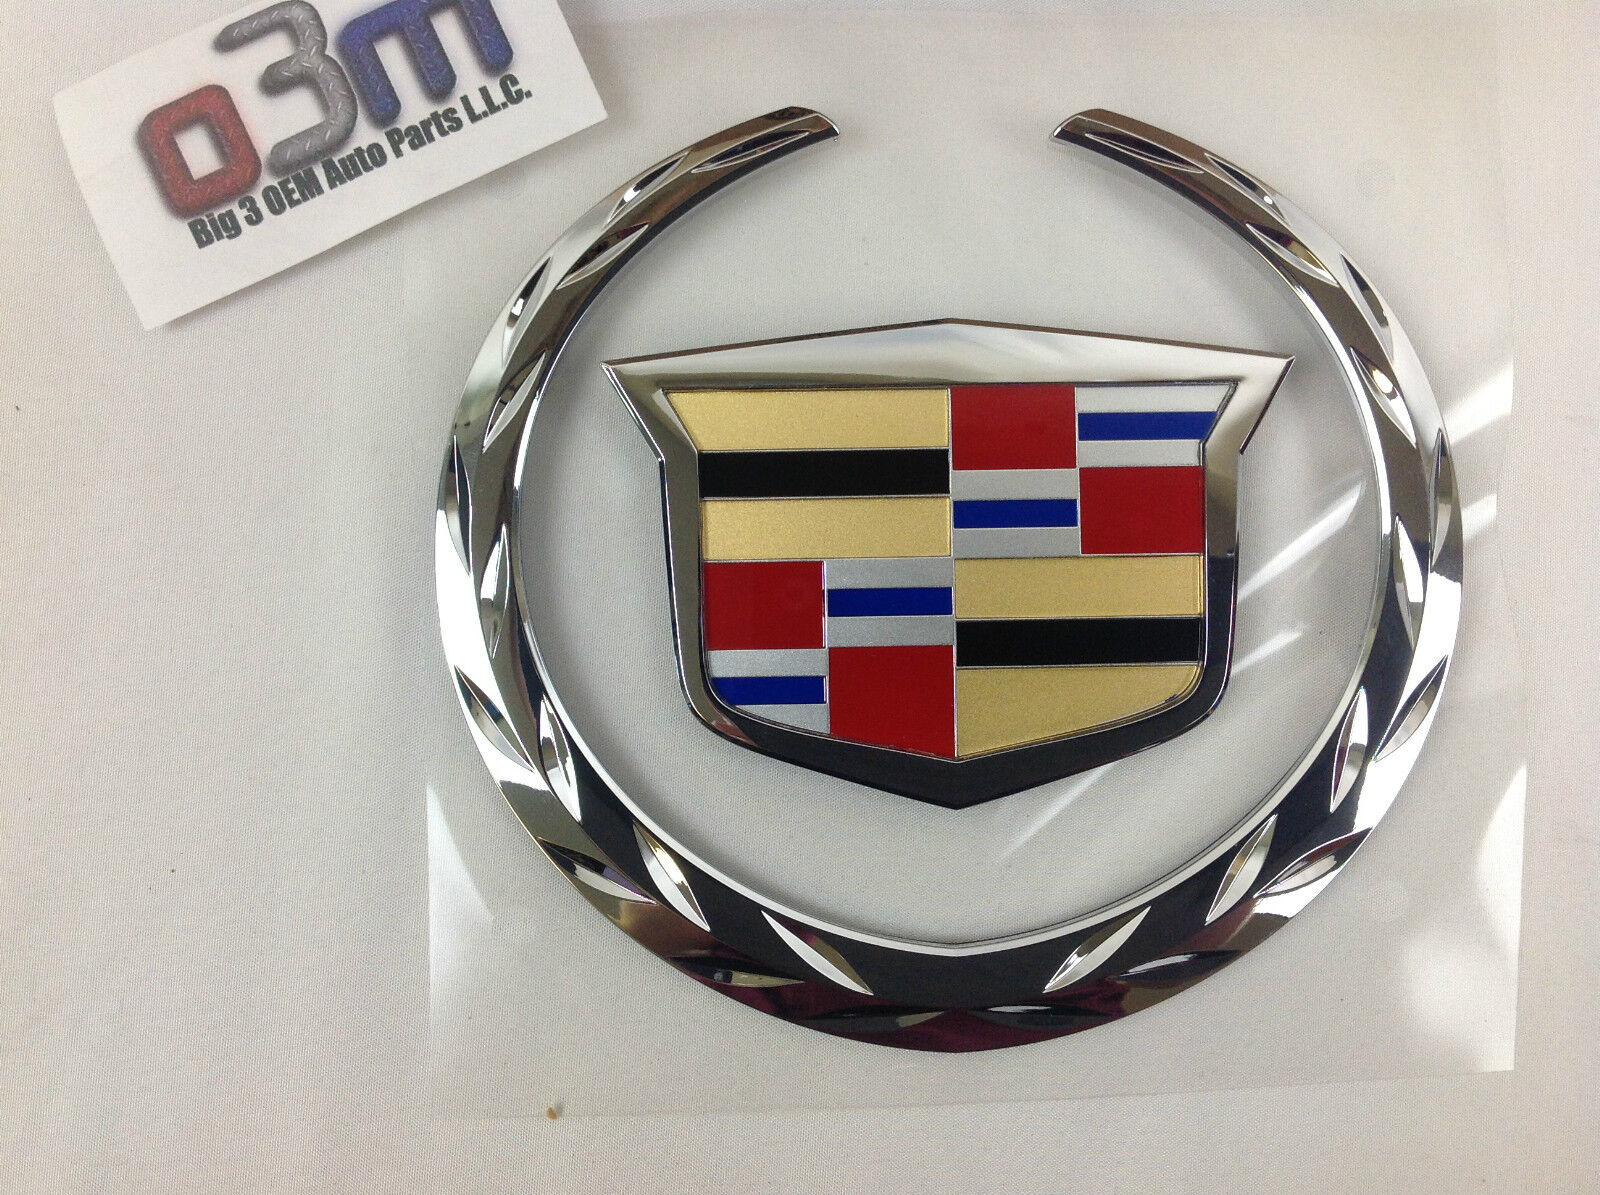 Cadillac Escalade EXT Rear Lift Gate Colored Crest Chrome Wreath Emblem new OEM